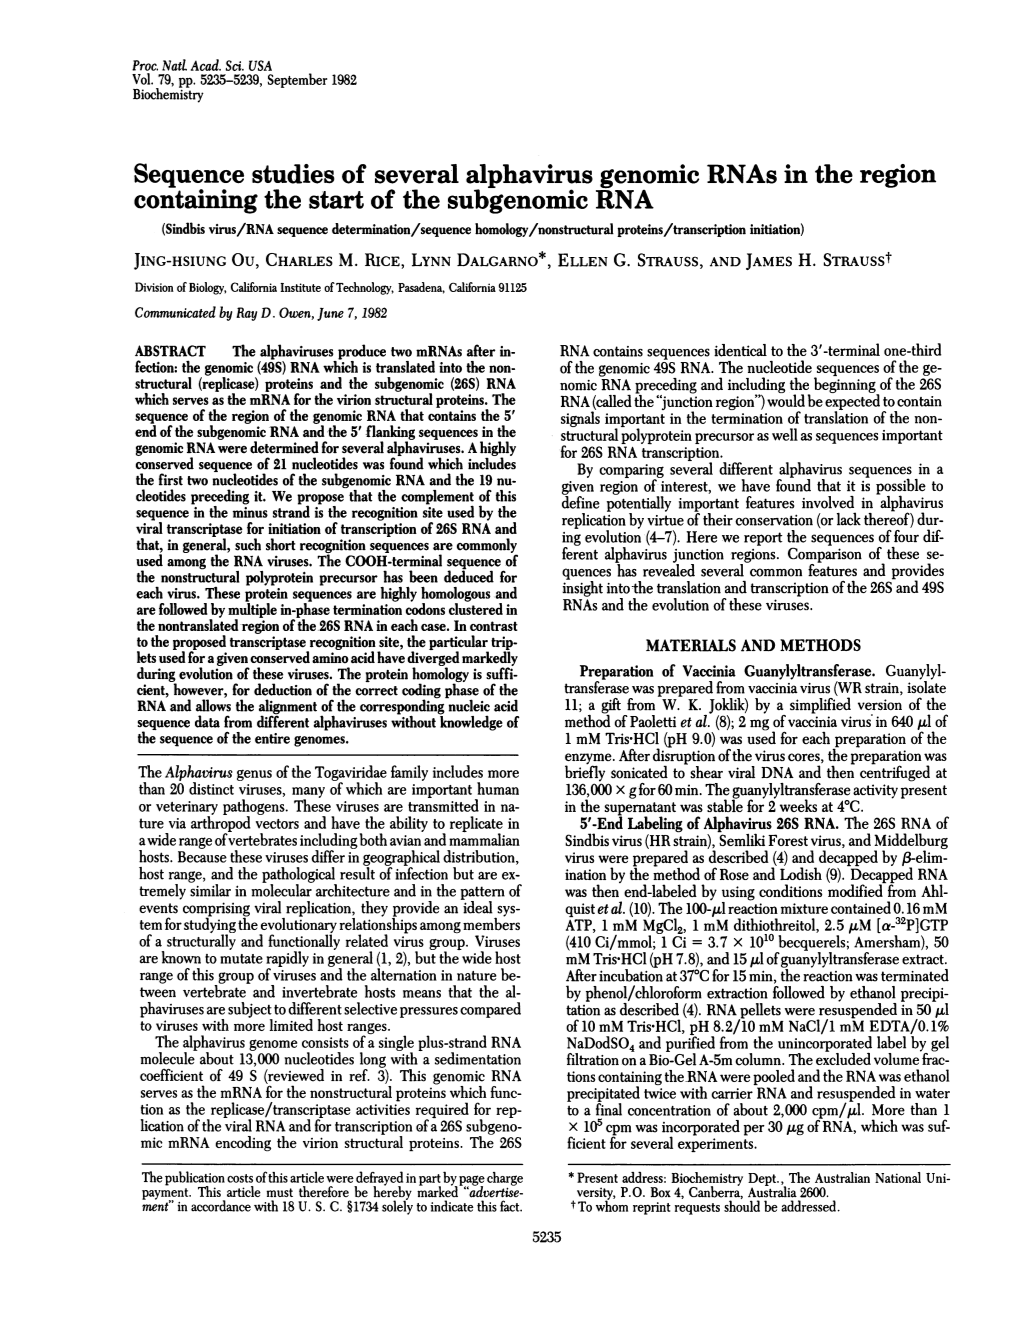 Sequence Studies of Several Alphavirusgenomic Rnas